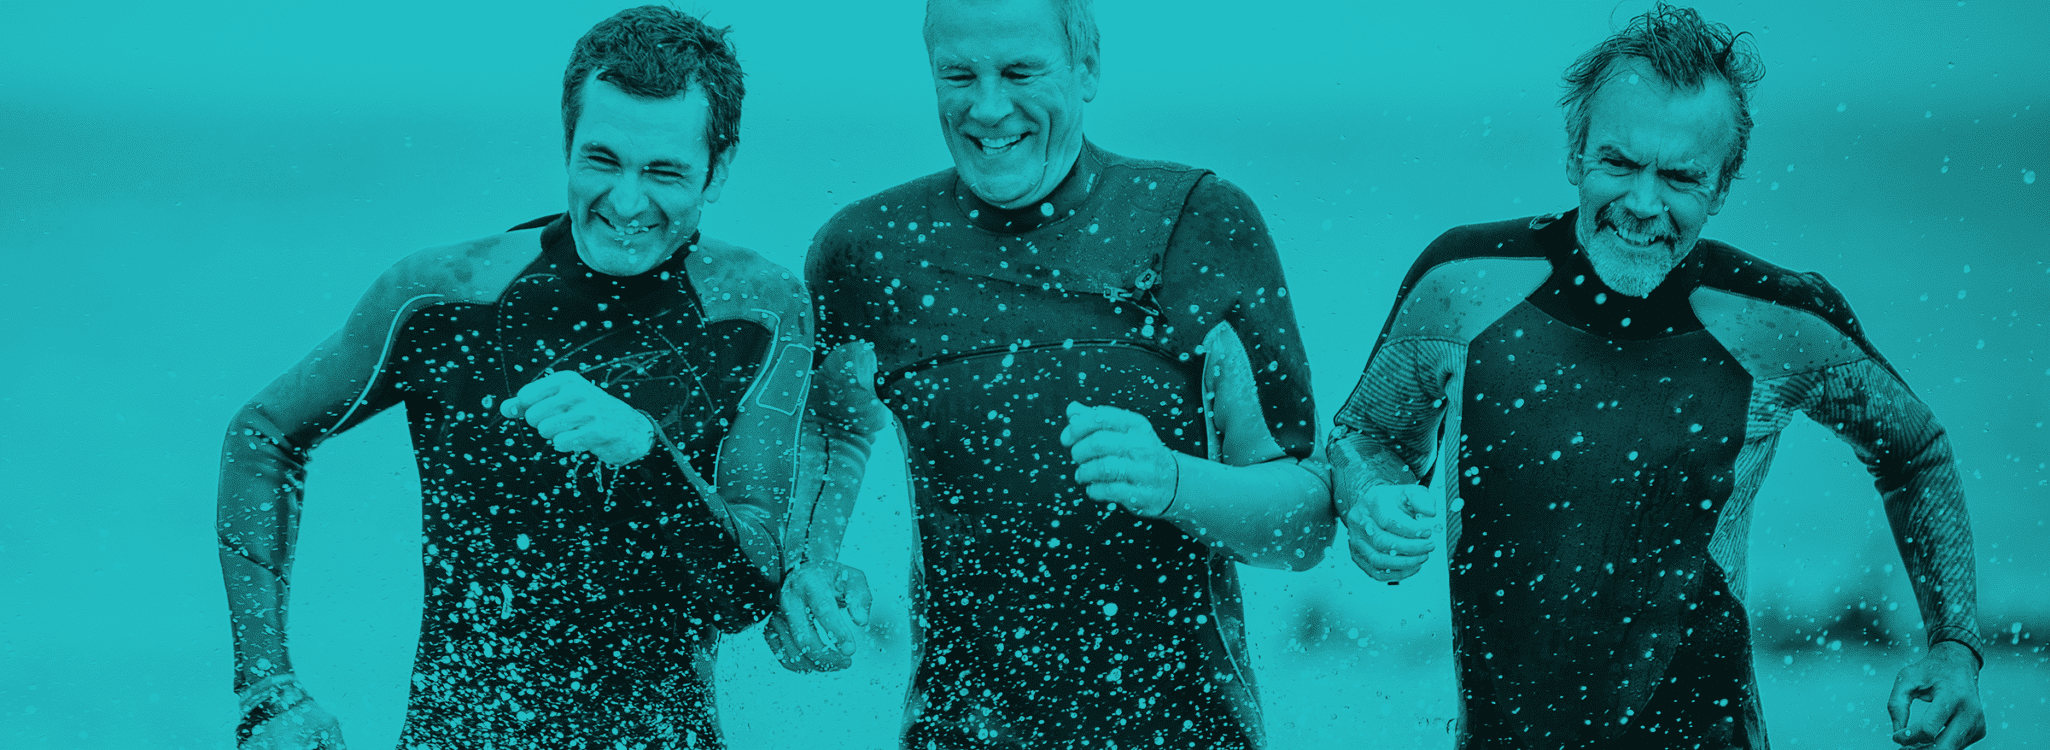 Rebrand - Peak Wellbeing - 3 men in wetsuits run through surf